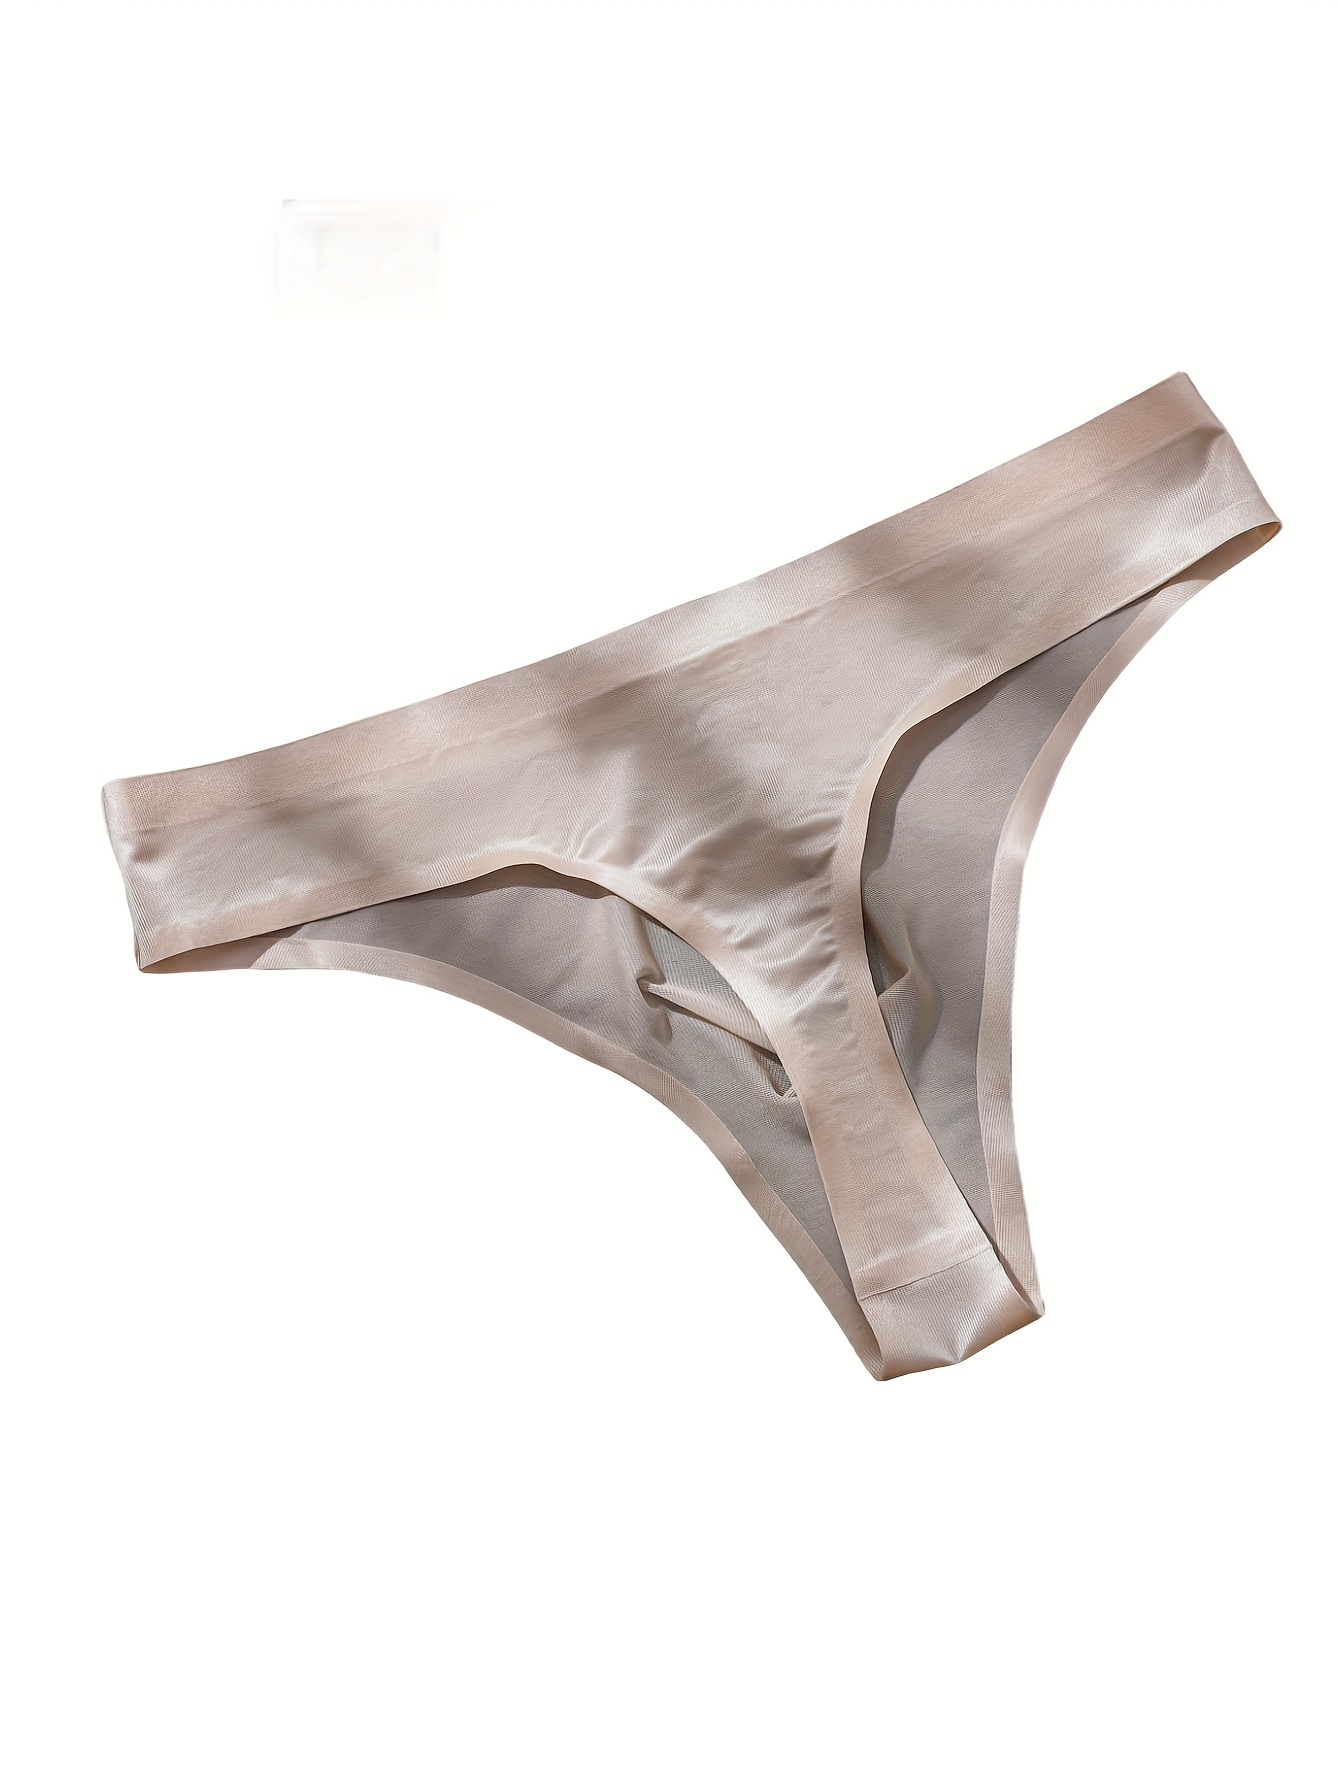 5pcs Thong Panties Sexy Lingerie Plus Size Woman Ice Silk Seamless